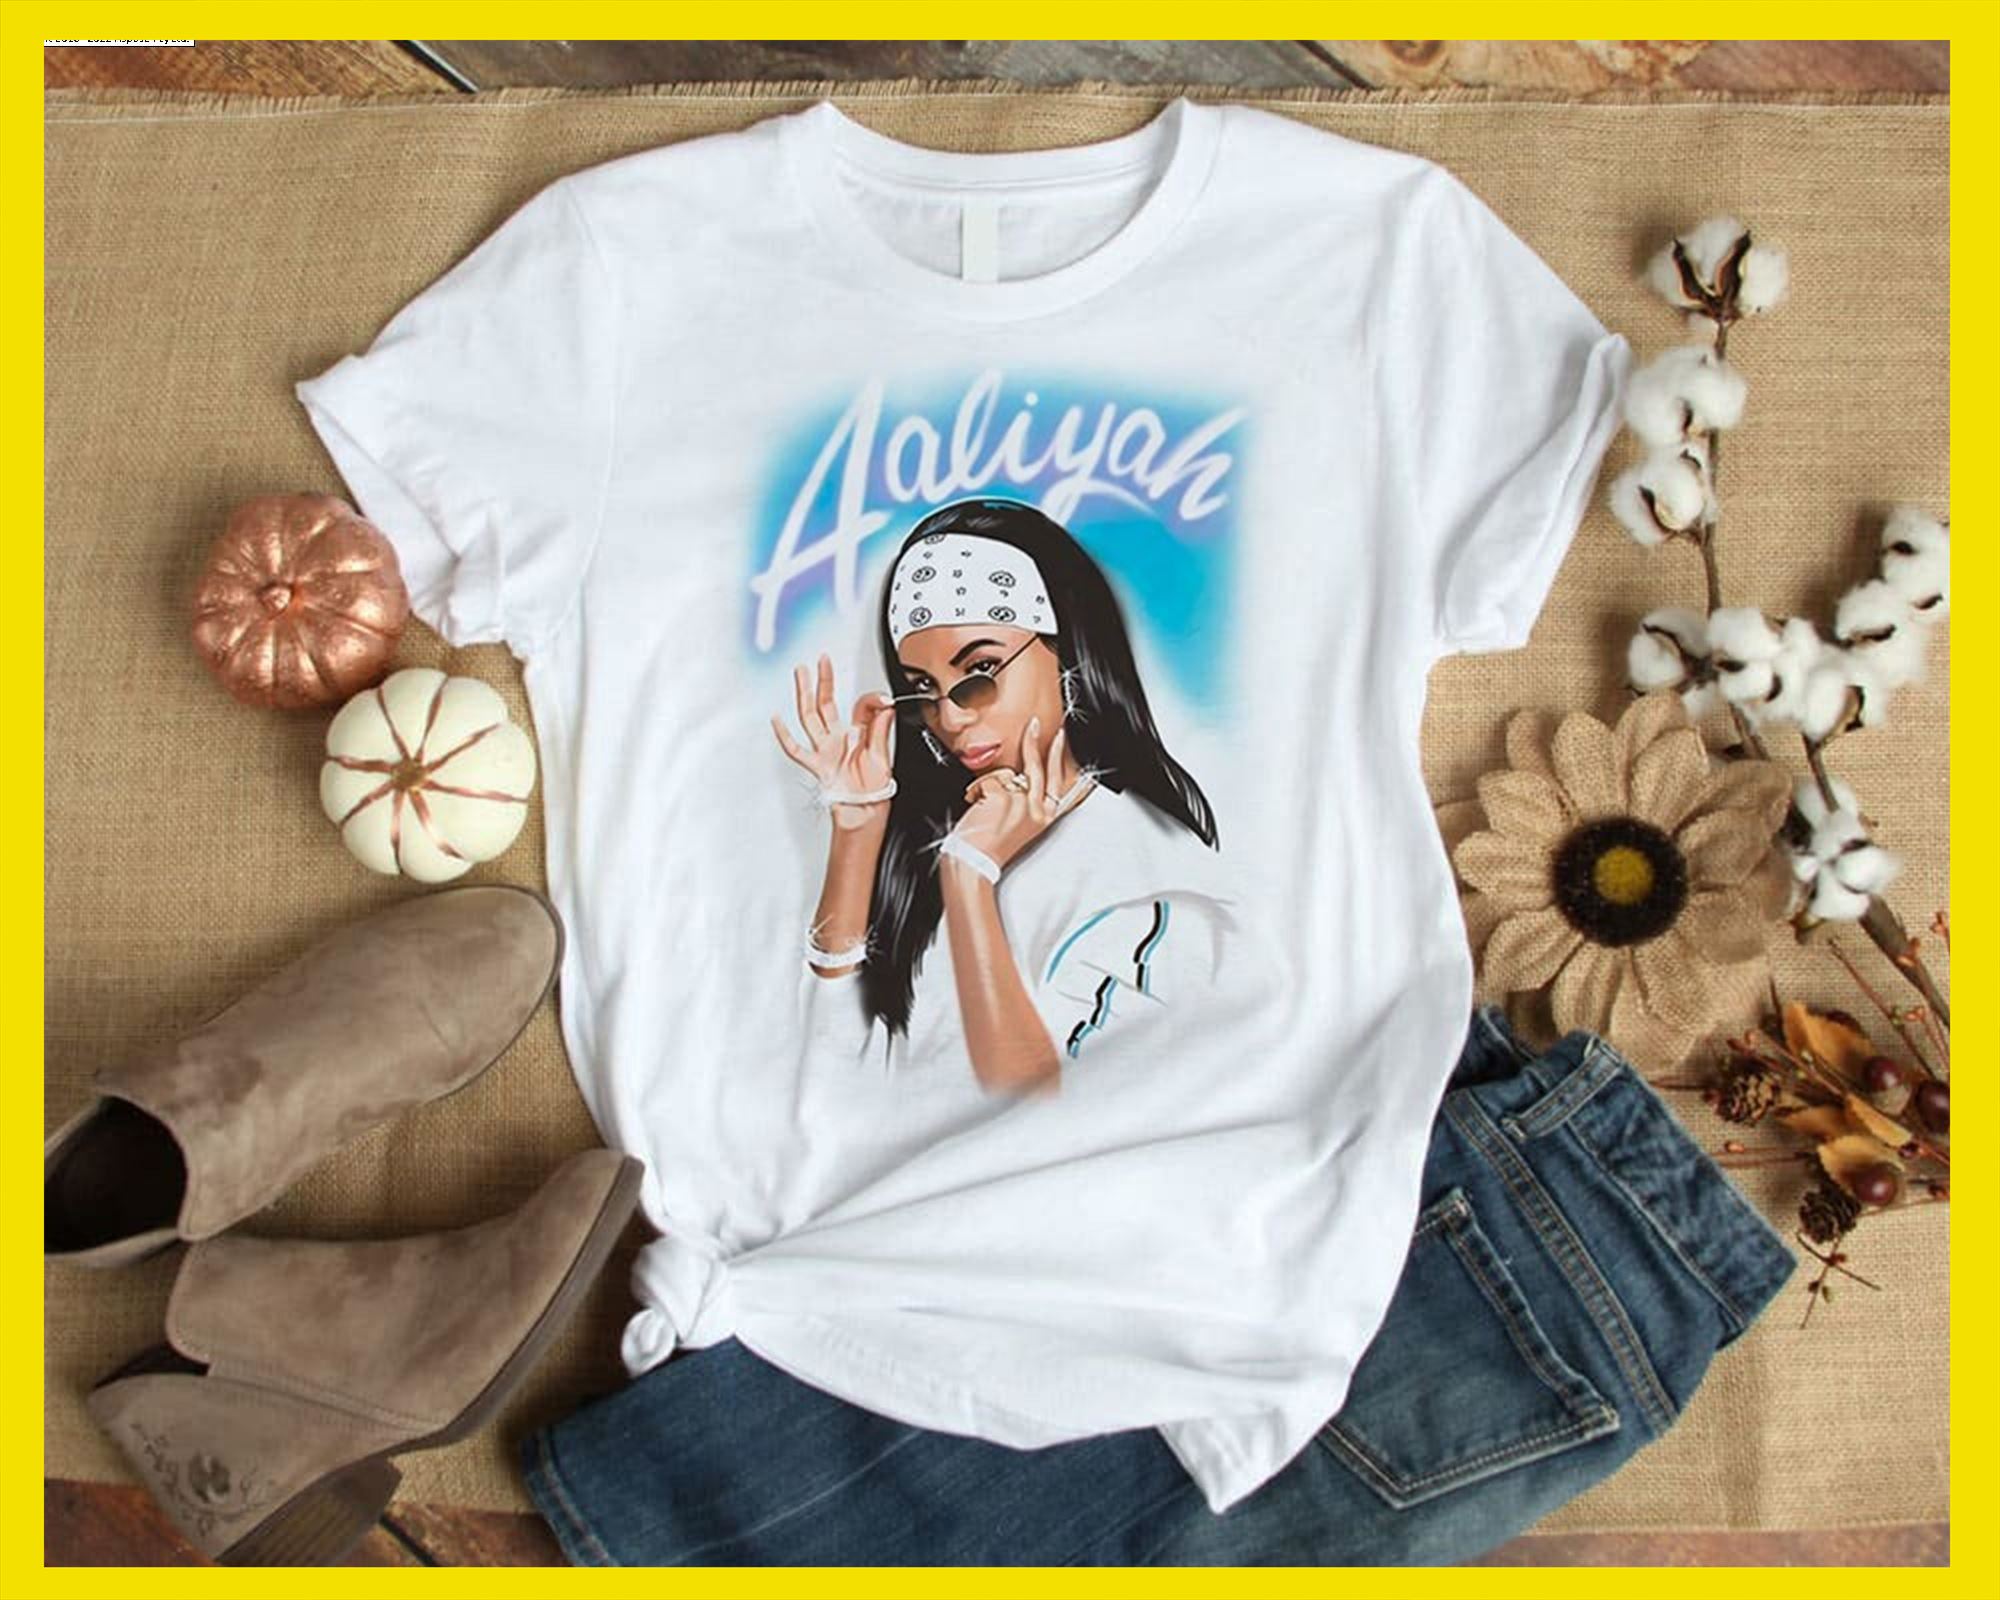 Aaliyah Airbrush Bandana T-shirt Aaliyah Shirt Fan Gifts Aaliyah Vintage Shirt Aaliyah Graphic Tee Rapper Shirt Rnb Shirt Rap Shirt